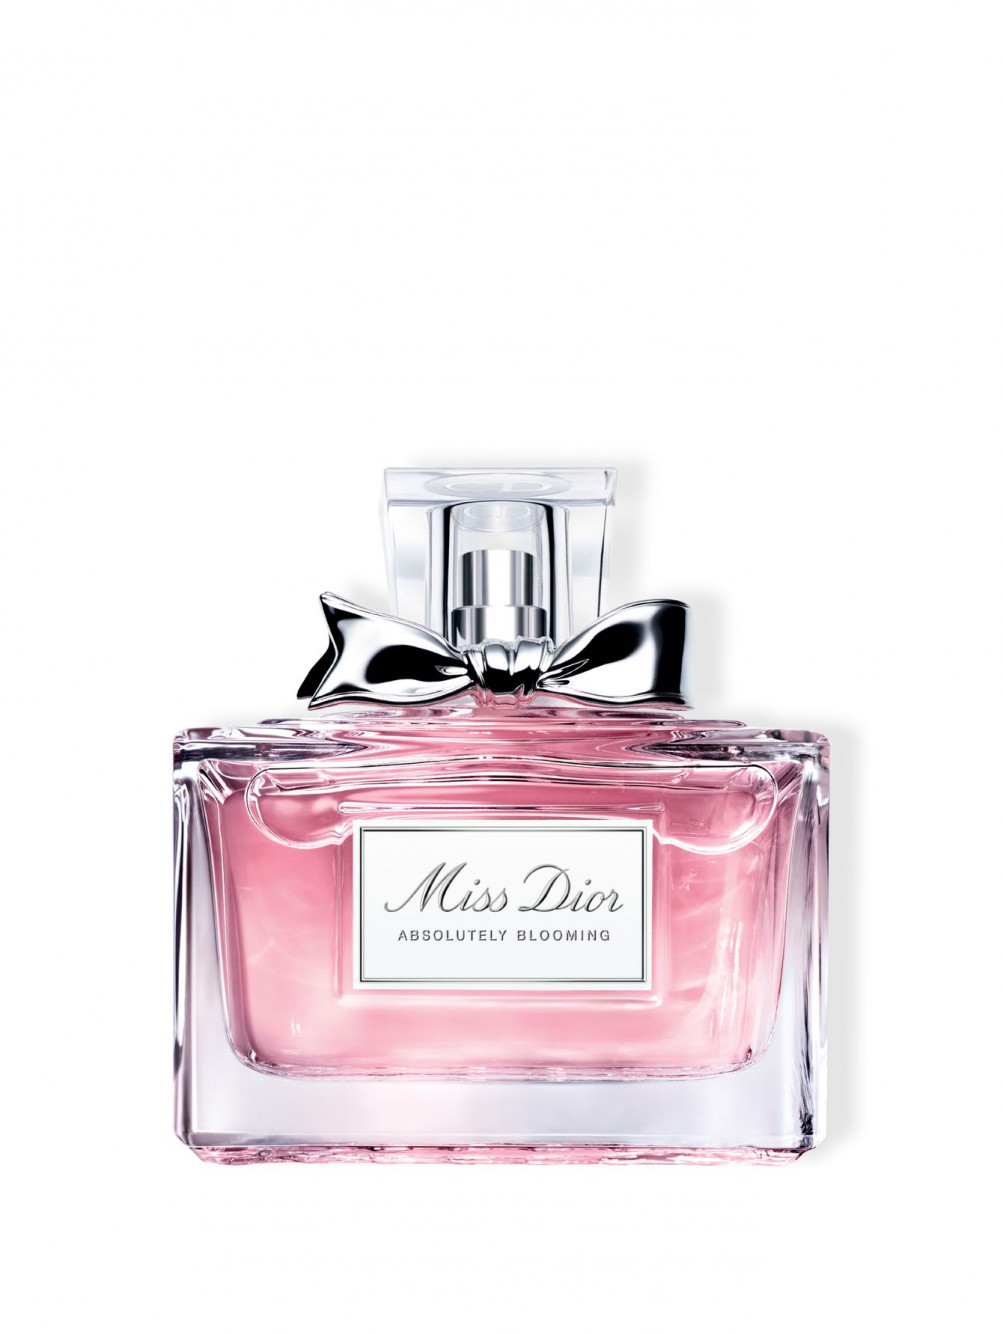 Miss Dior Absolutely Blooming Парфюмерная вода 30 мл - Общий вид